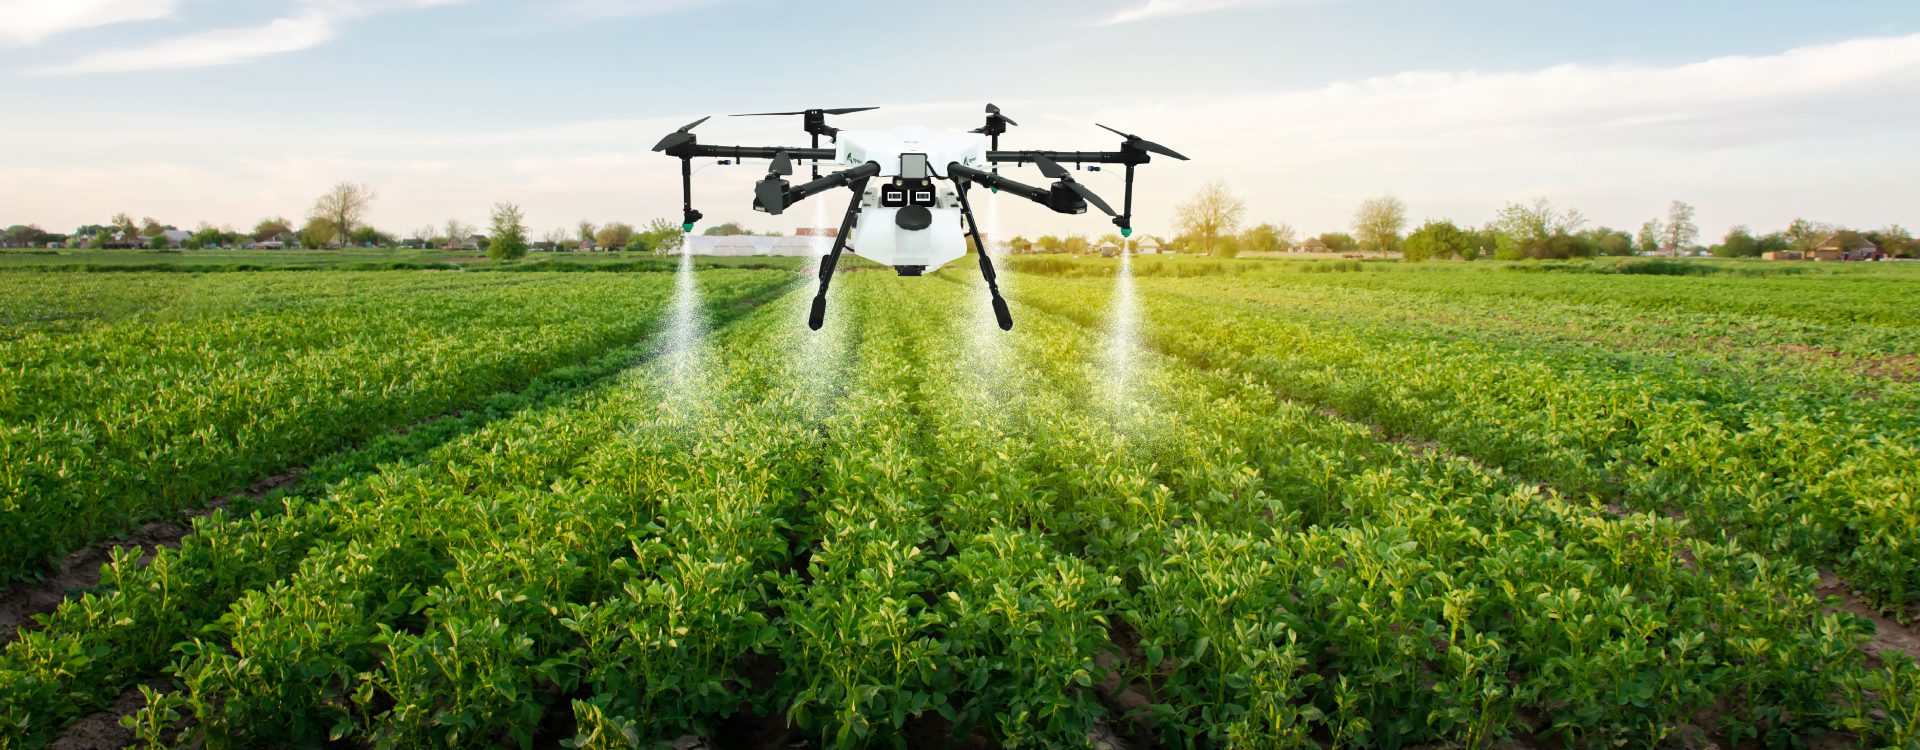 Drones for Spraying Pesticides